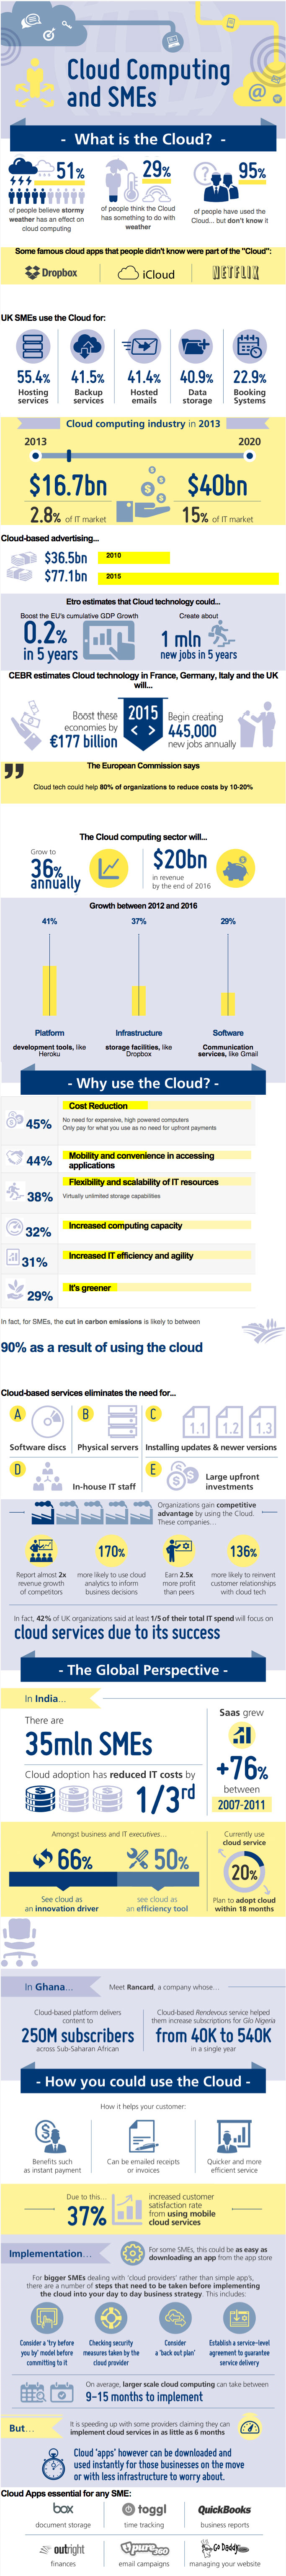 Cloud-Computing-and-SMEs